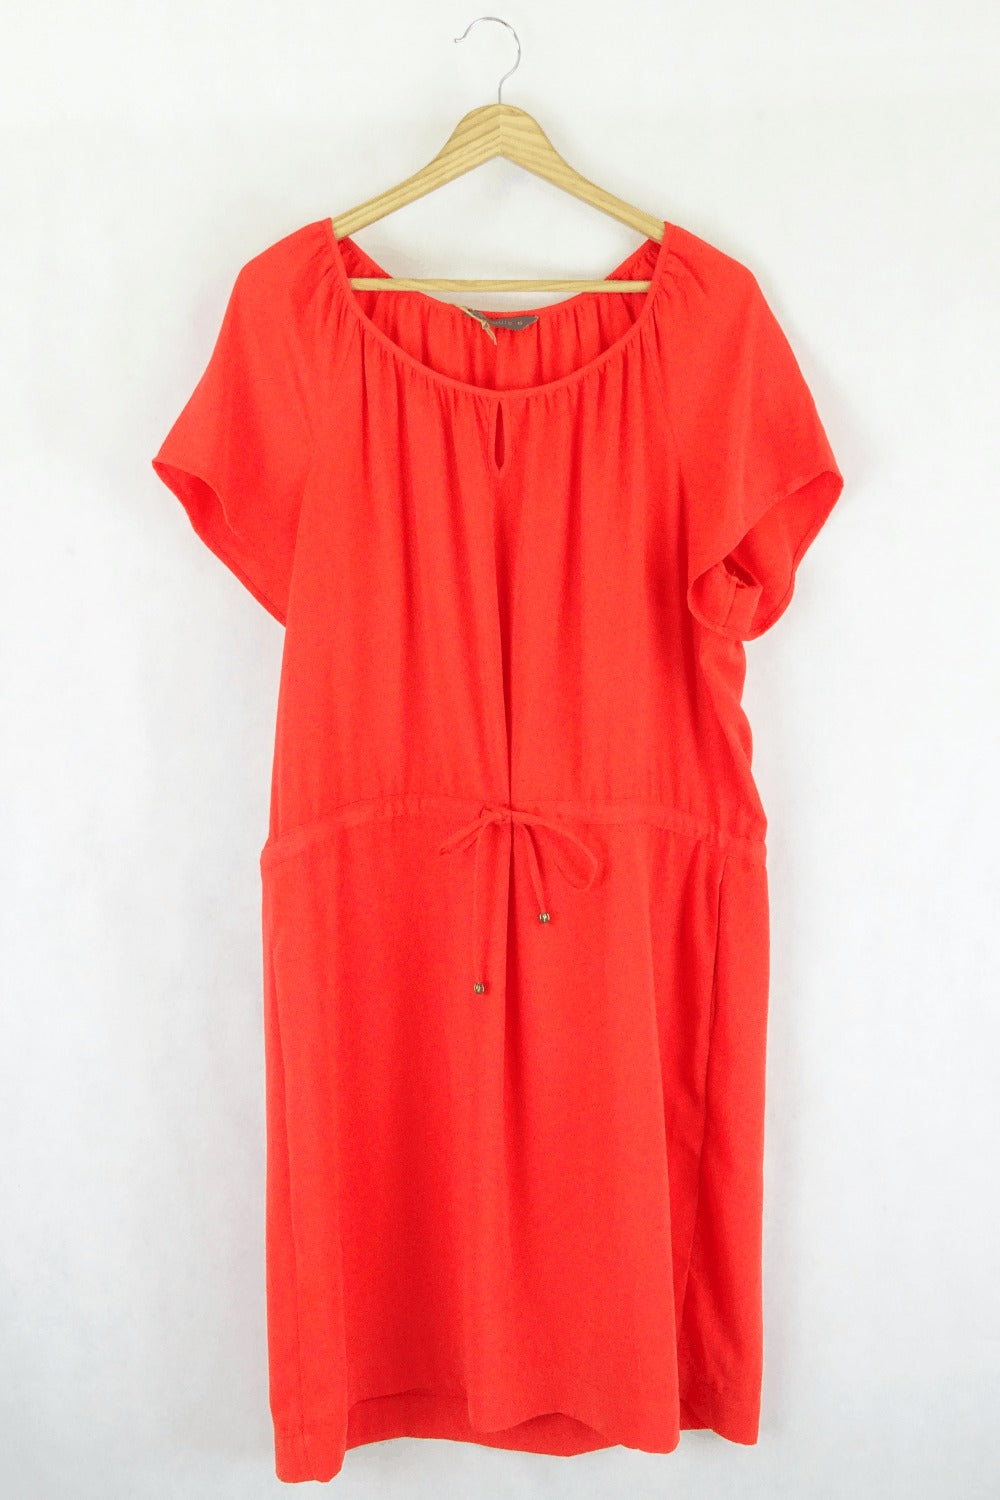 Jacquie E  orange dress 16